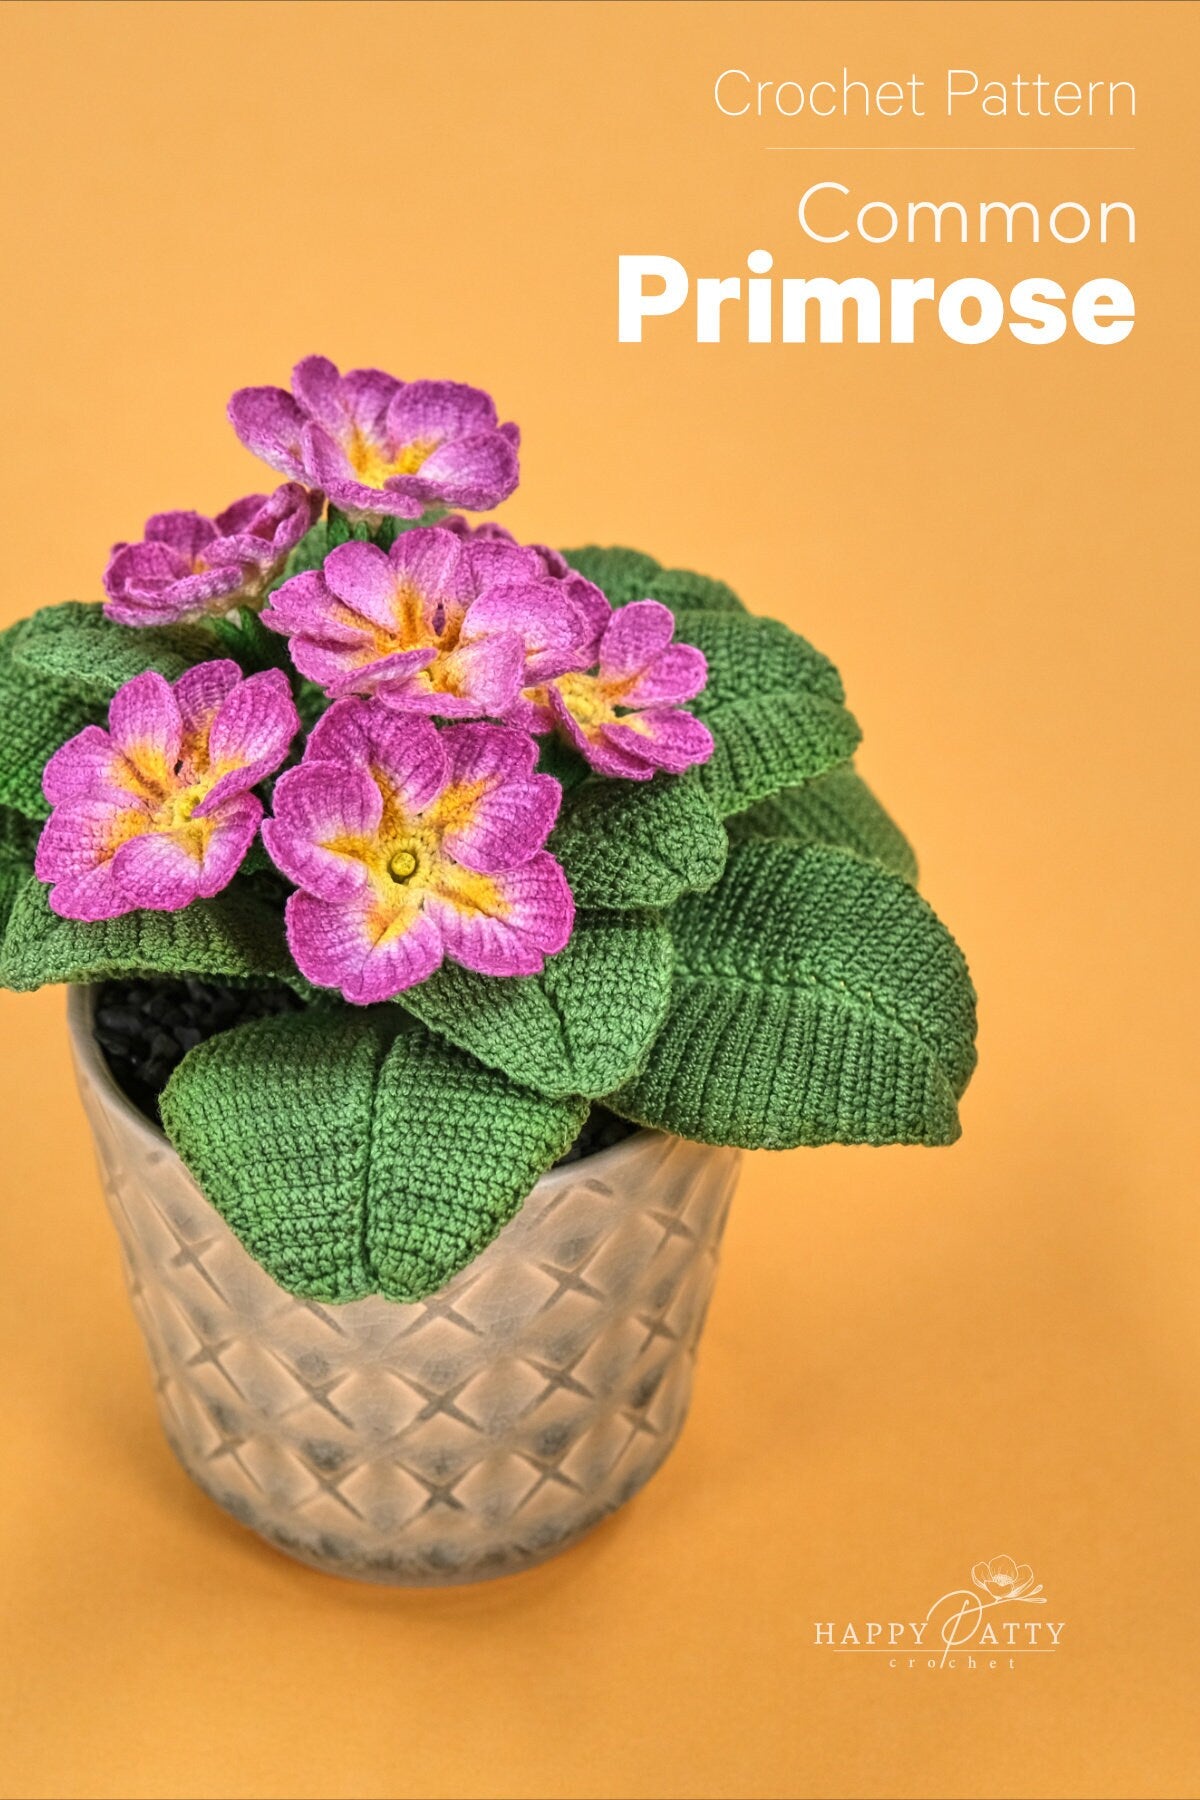 Crochet Primrose Flower Pattern - Crochet Flower Pattern for a Primrose Plant